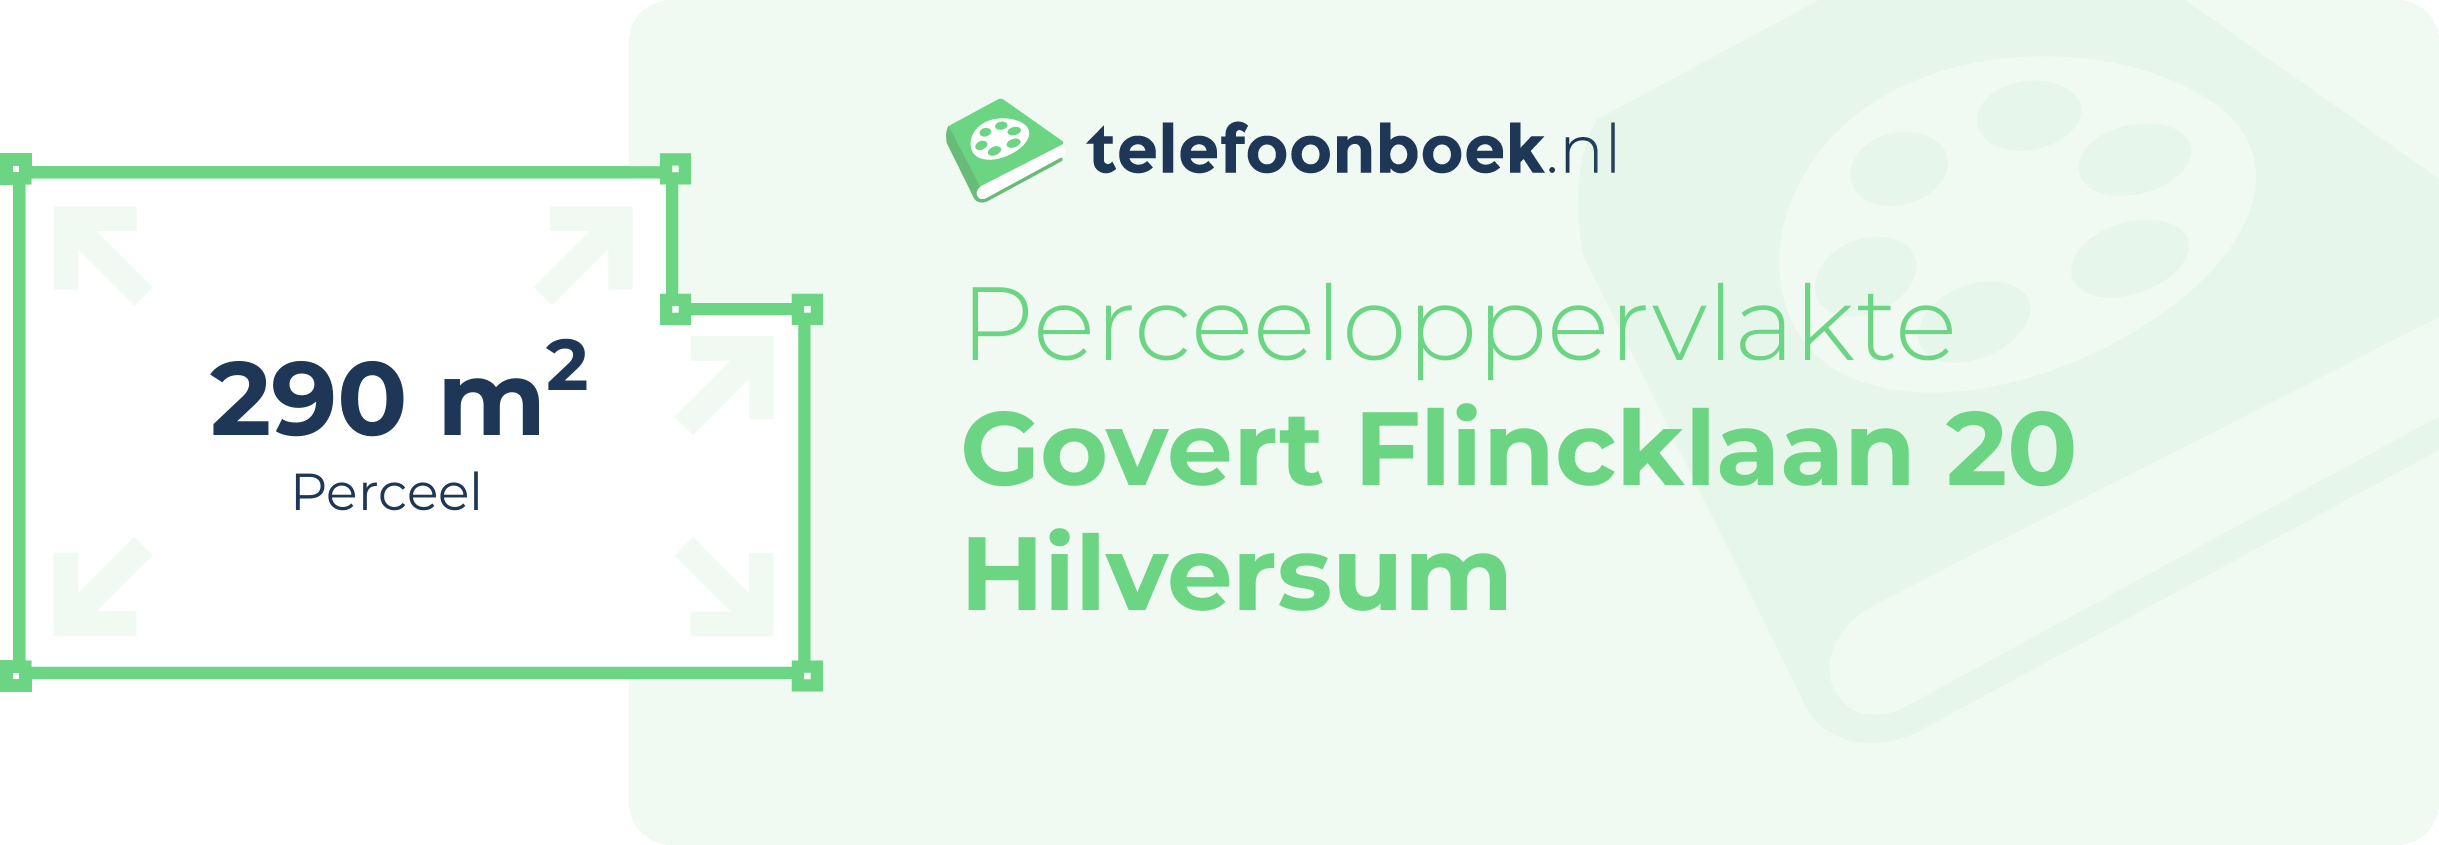 Perceeloppervlakte Govert Flincklaan 20 Hilversum